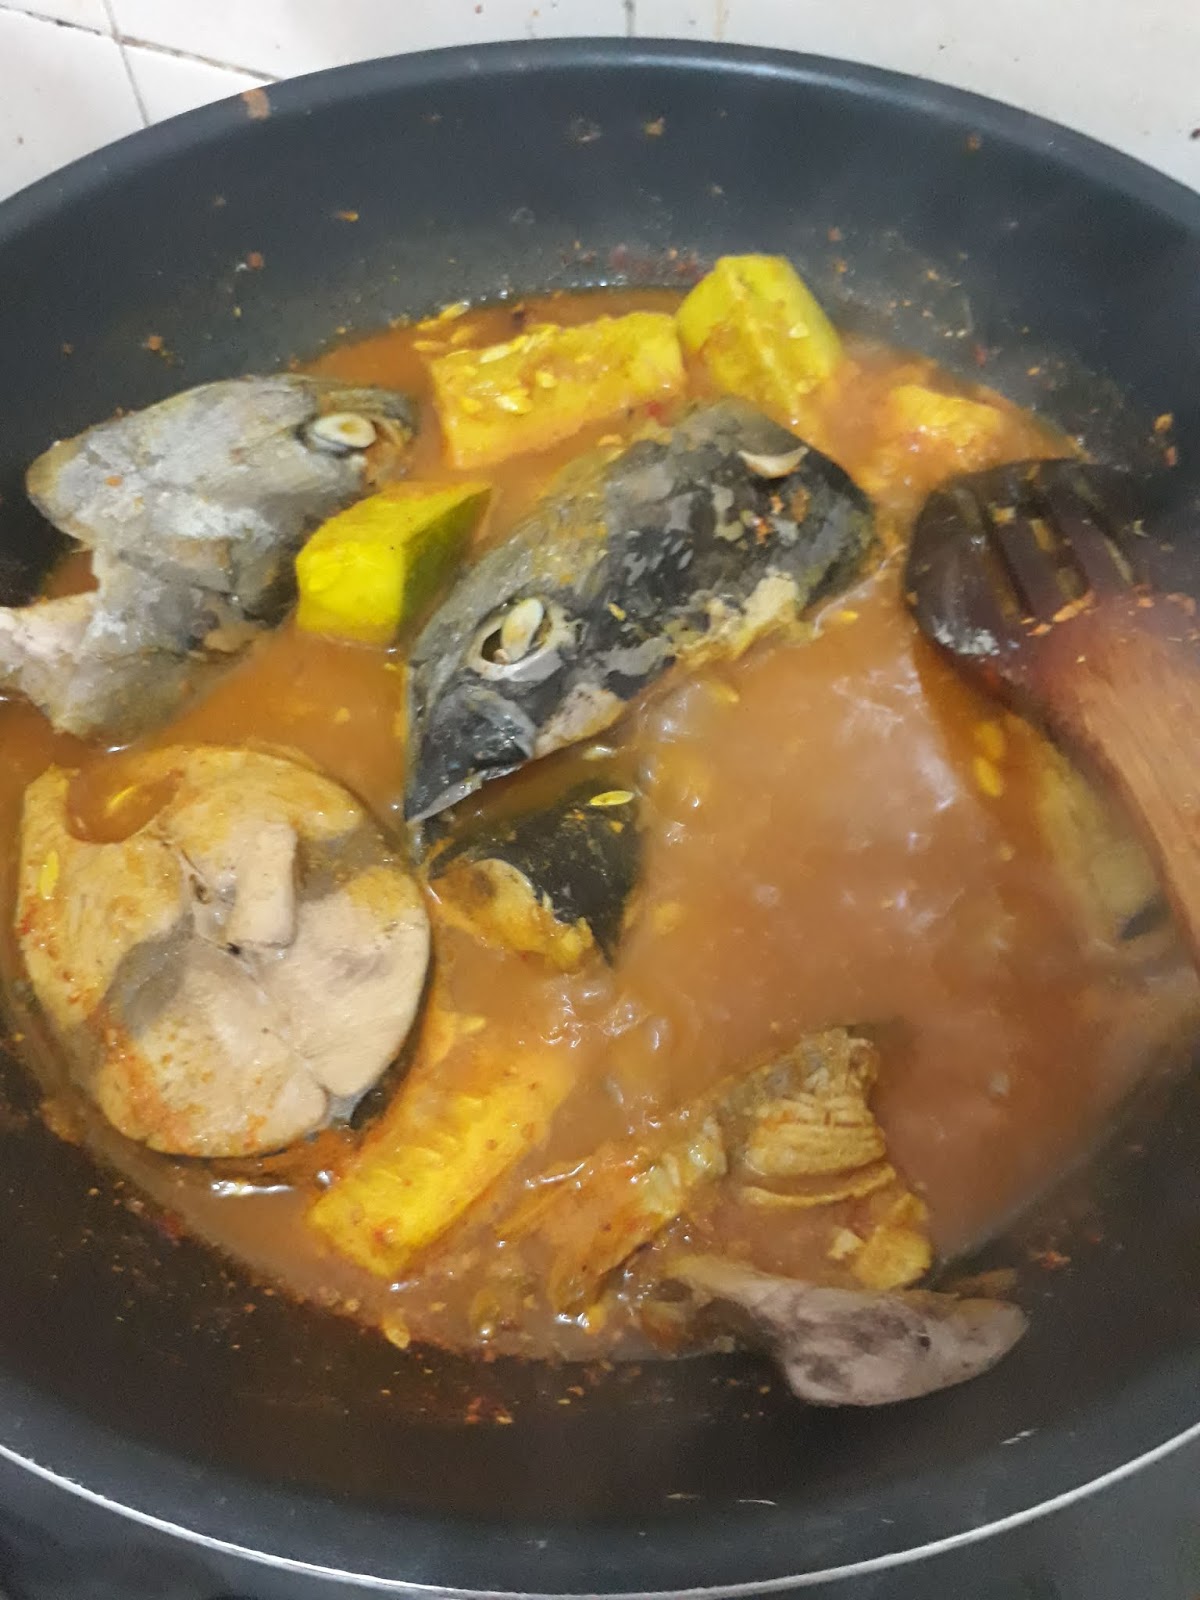 DANA: Resepi gulai kuning ikan aye @tongkol